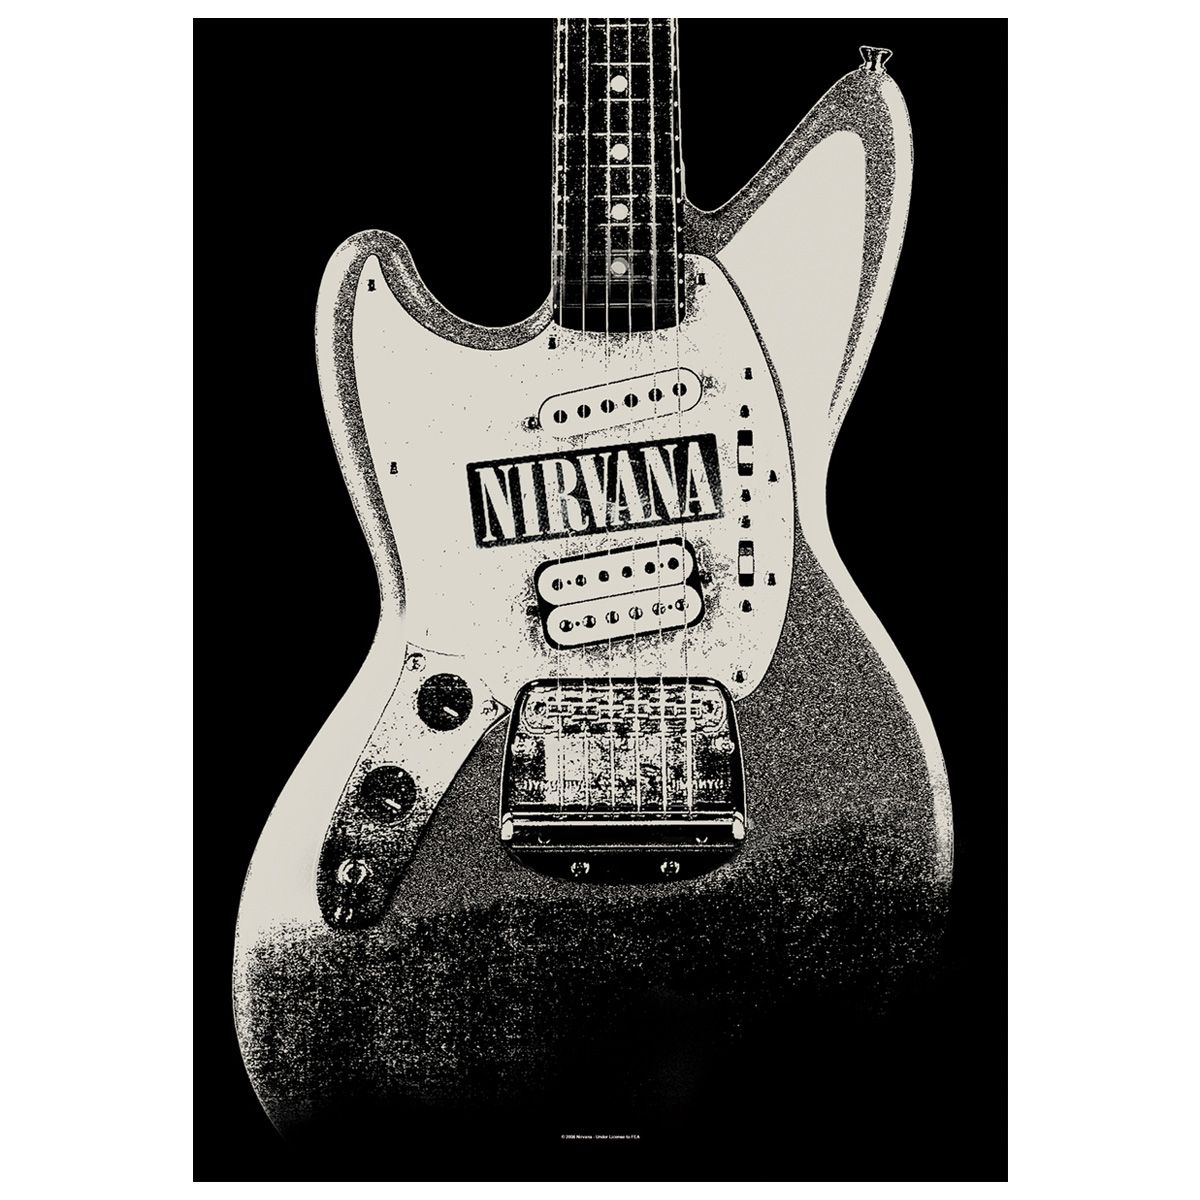 Nirvana guitar. Nirvana на гитаре. Нирвана на гитаре. Постер 'гитара'. Нирвана на электрогитаре.